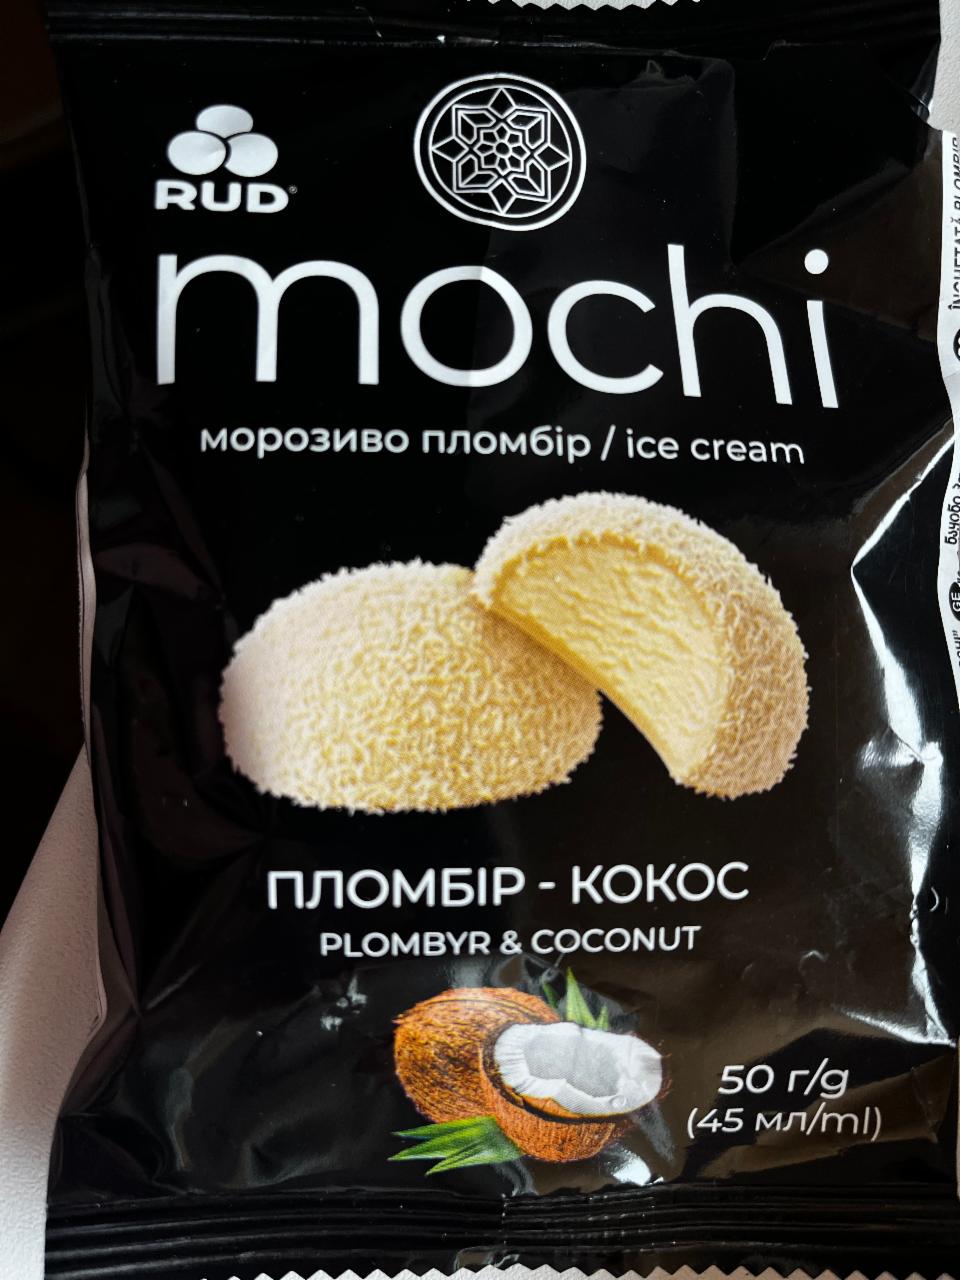 Фото - Мороженое пломбир пломбир-кокос Mochi Рудь Rud